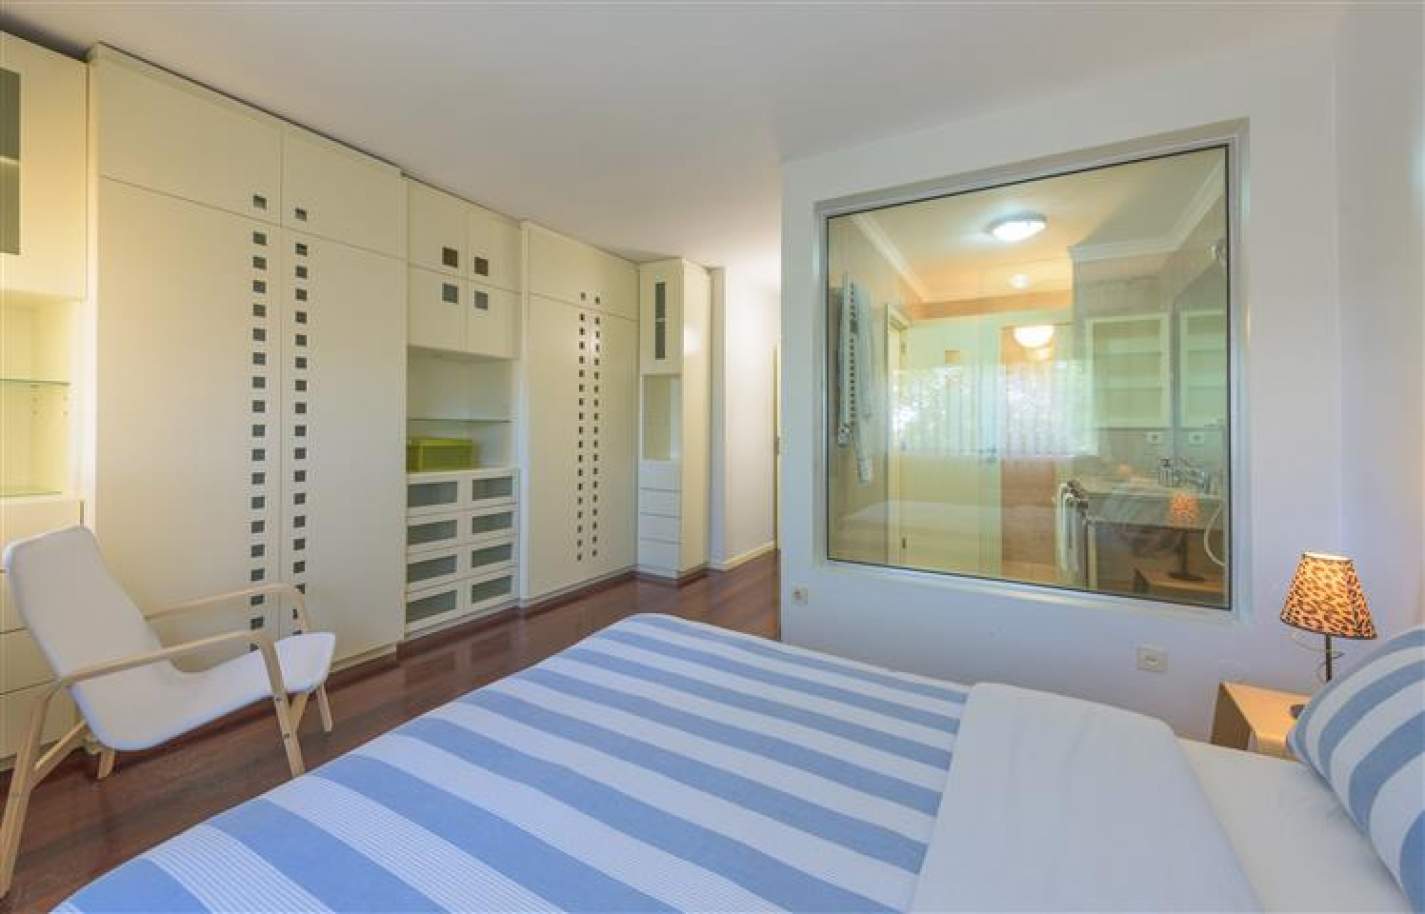 3 bedroom villa with garage, for sale, in Foz Velha, Porto, Portugal_172030